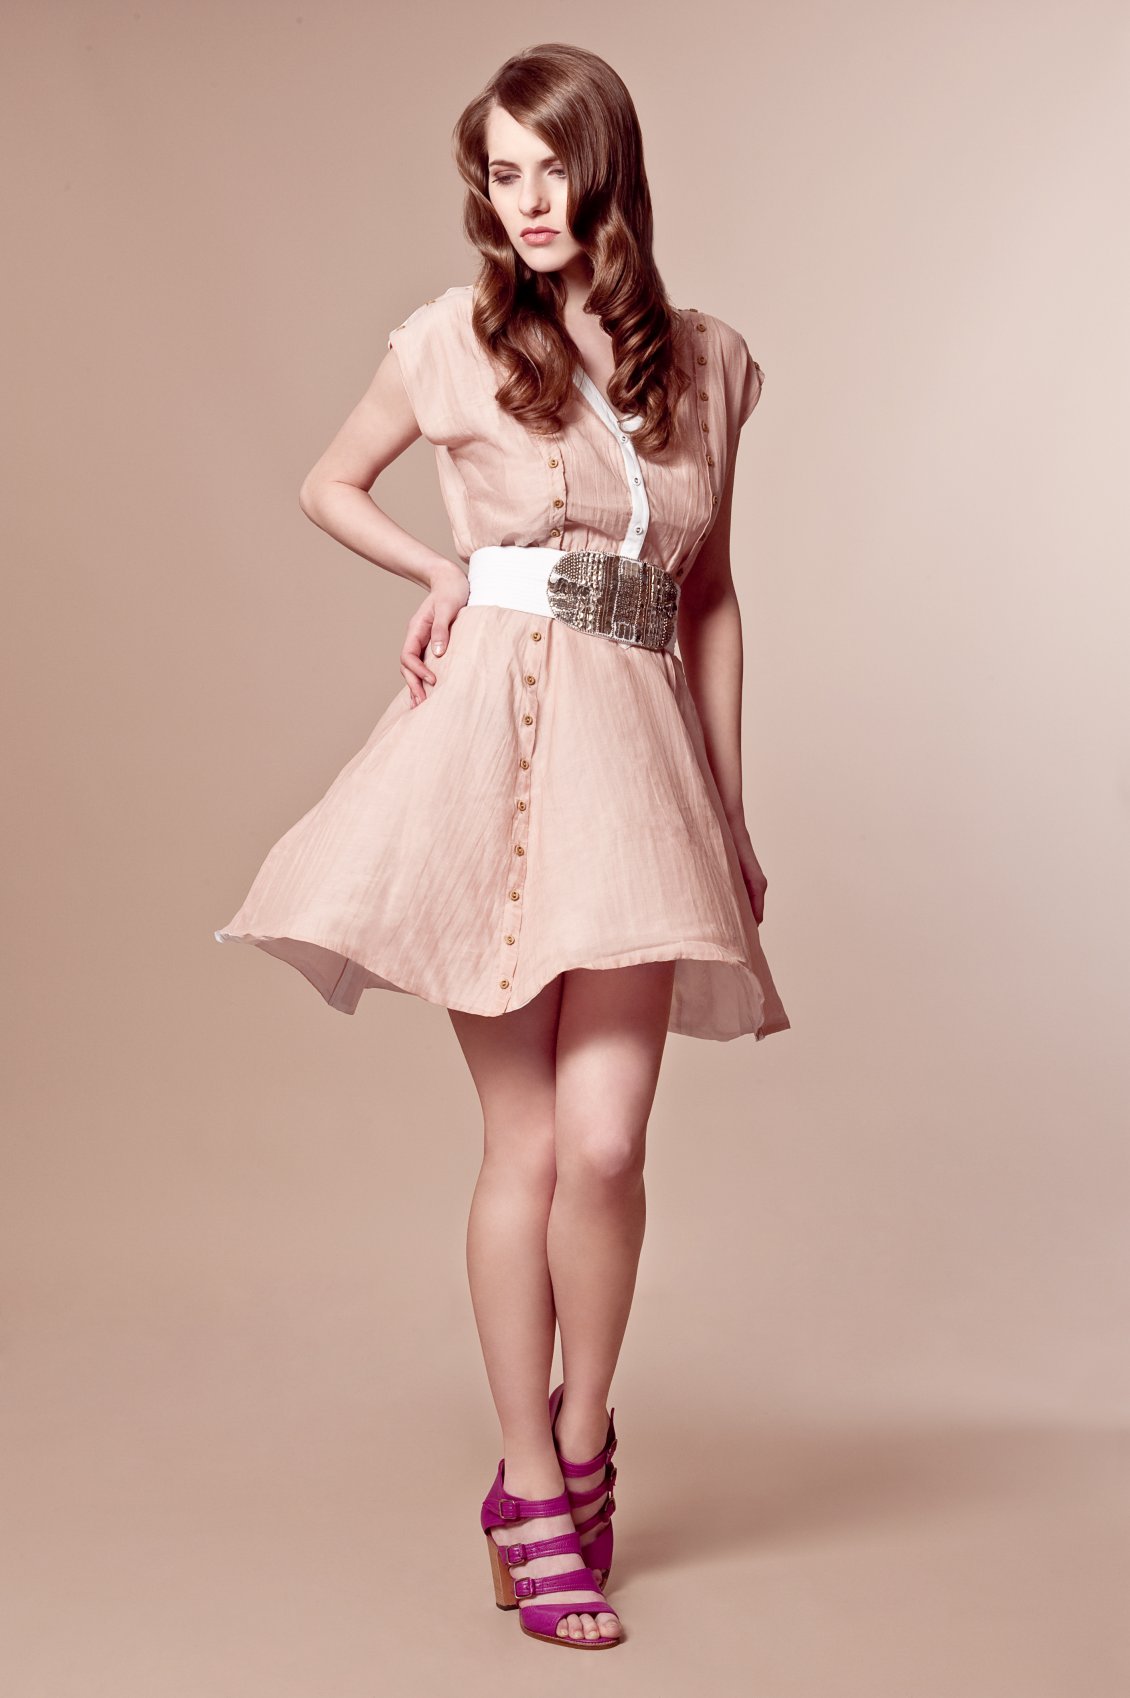 Download Wallpaper Girl model in a dress at presentation